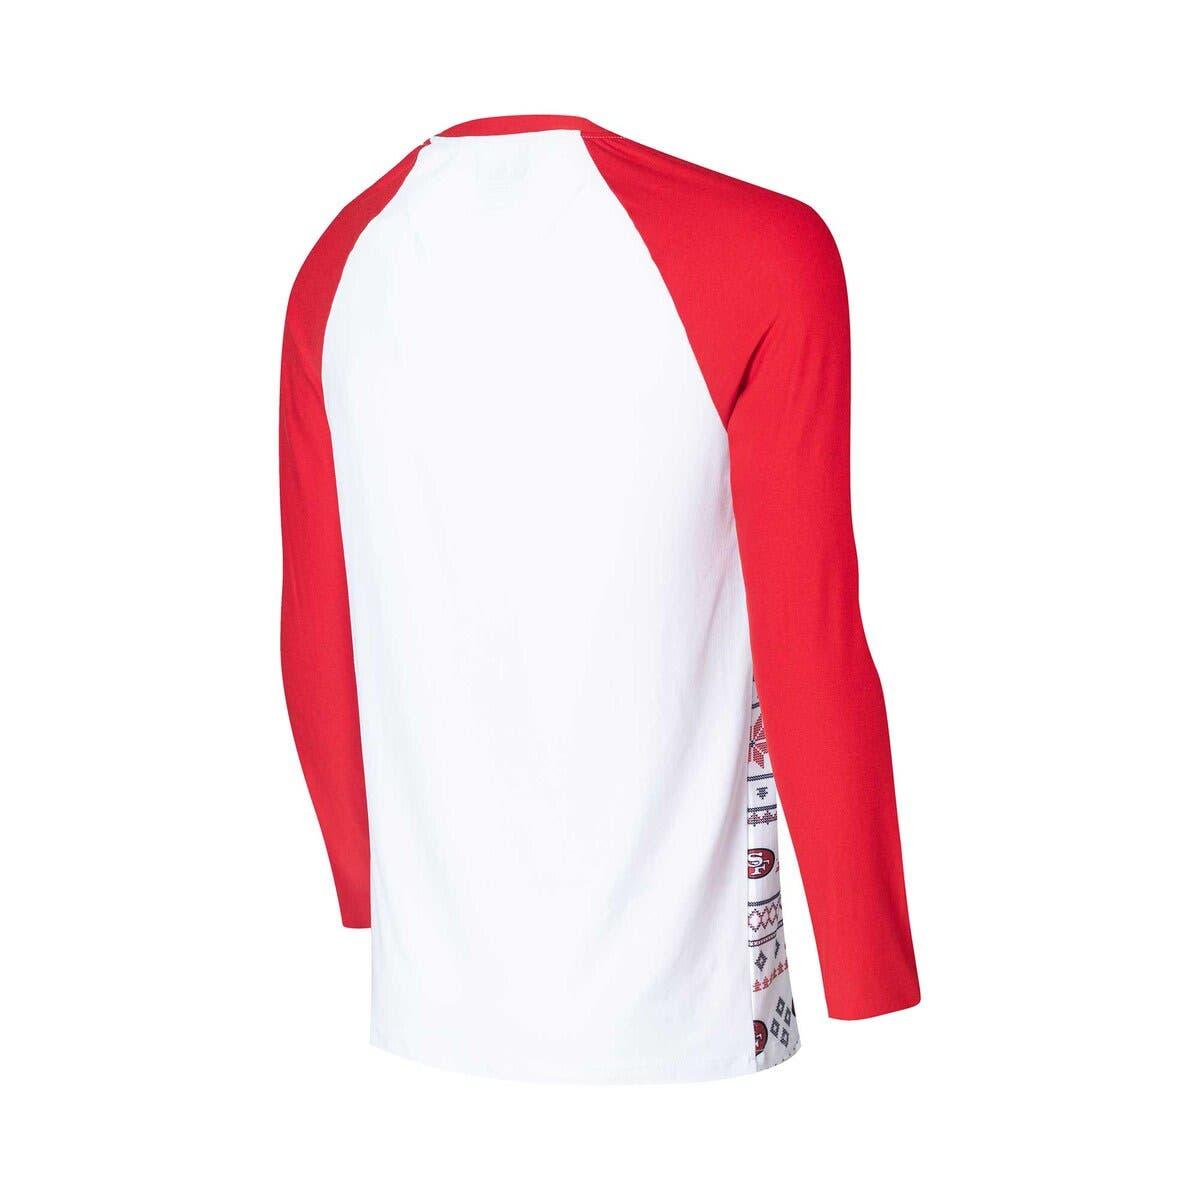 Women's Concepts Sport Red/Black Louisville Cardinals Arctic T-Shirt & Flannel Pants Sleep Set Size: Small